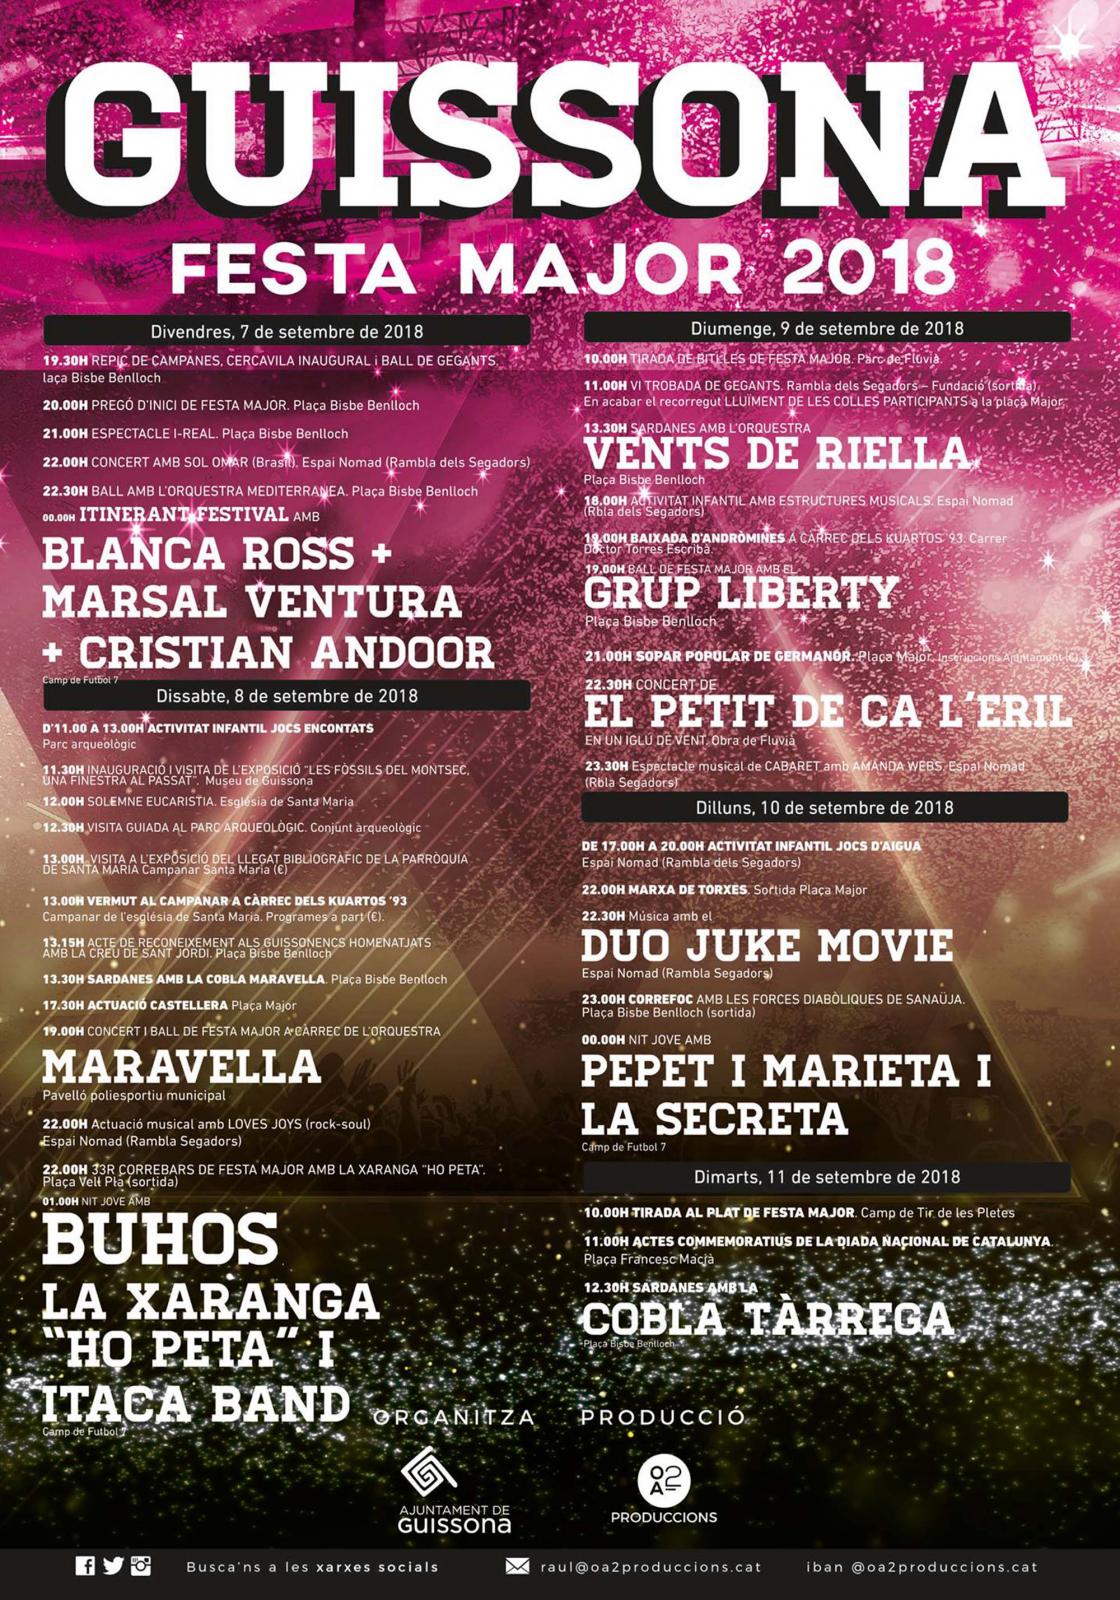 Festa major de Guissona 2018